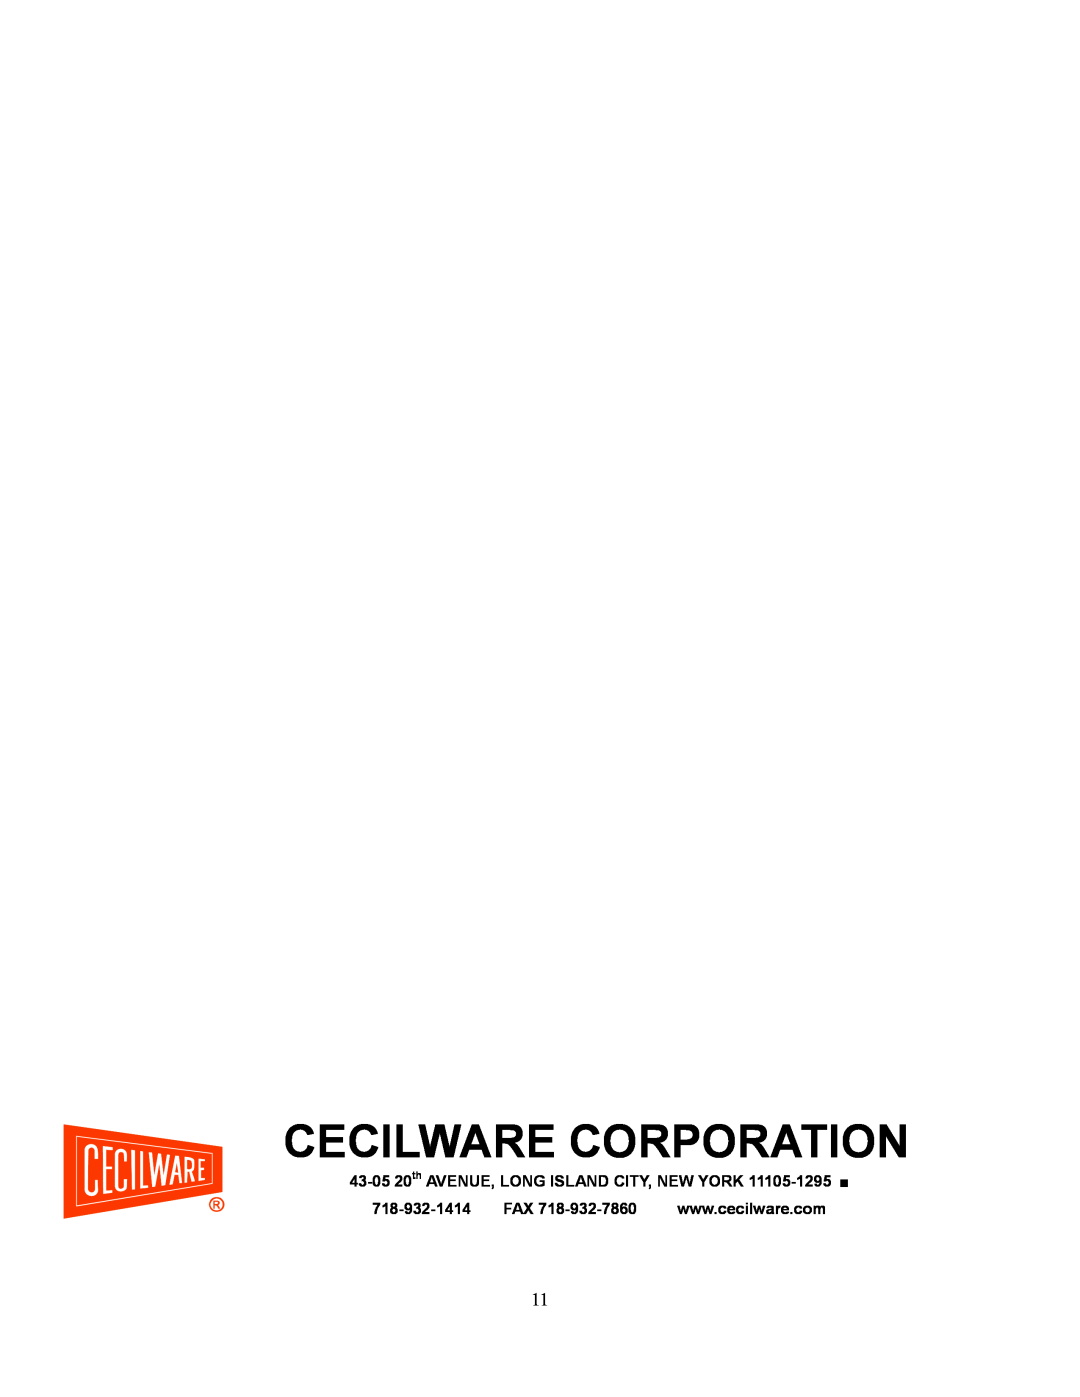 Cecilware SG-1SG operation manual Cecilware Corporation, 43-05 20th AVENUE, LONG ISLAND CITY, NEW YORK 